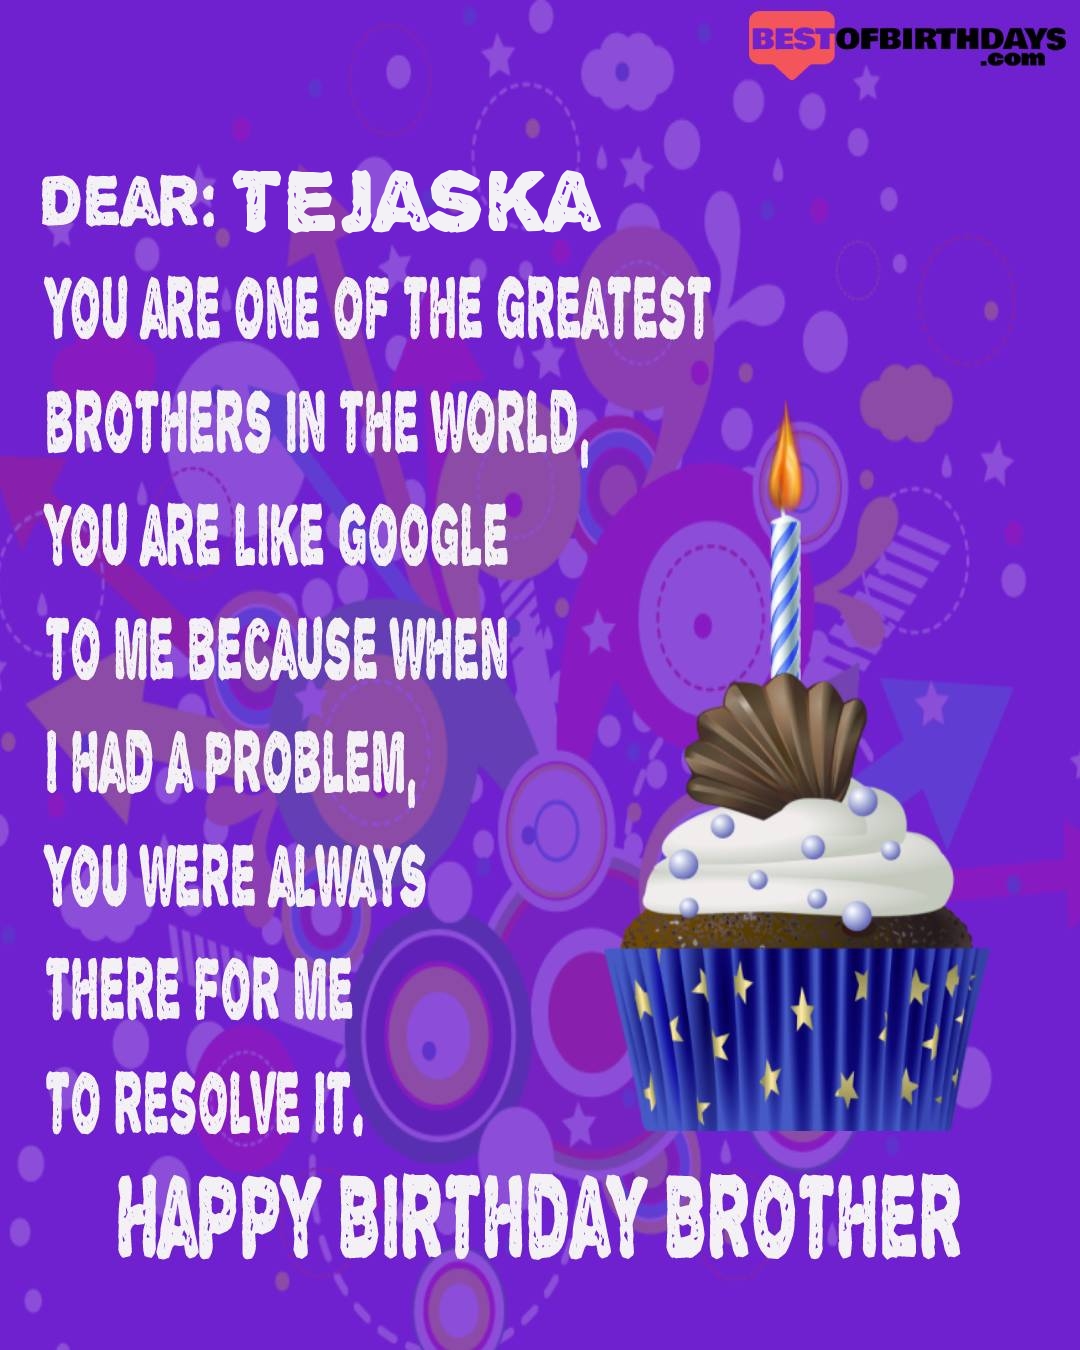 Happy birthday tejaska bhai brother bro